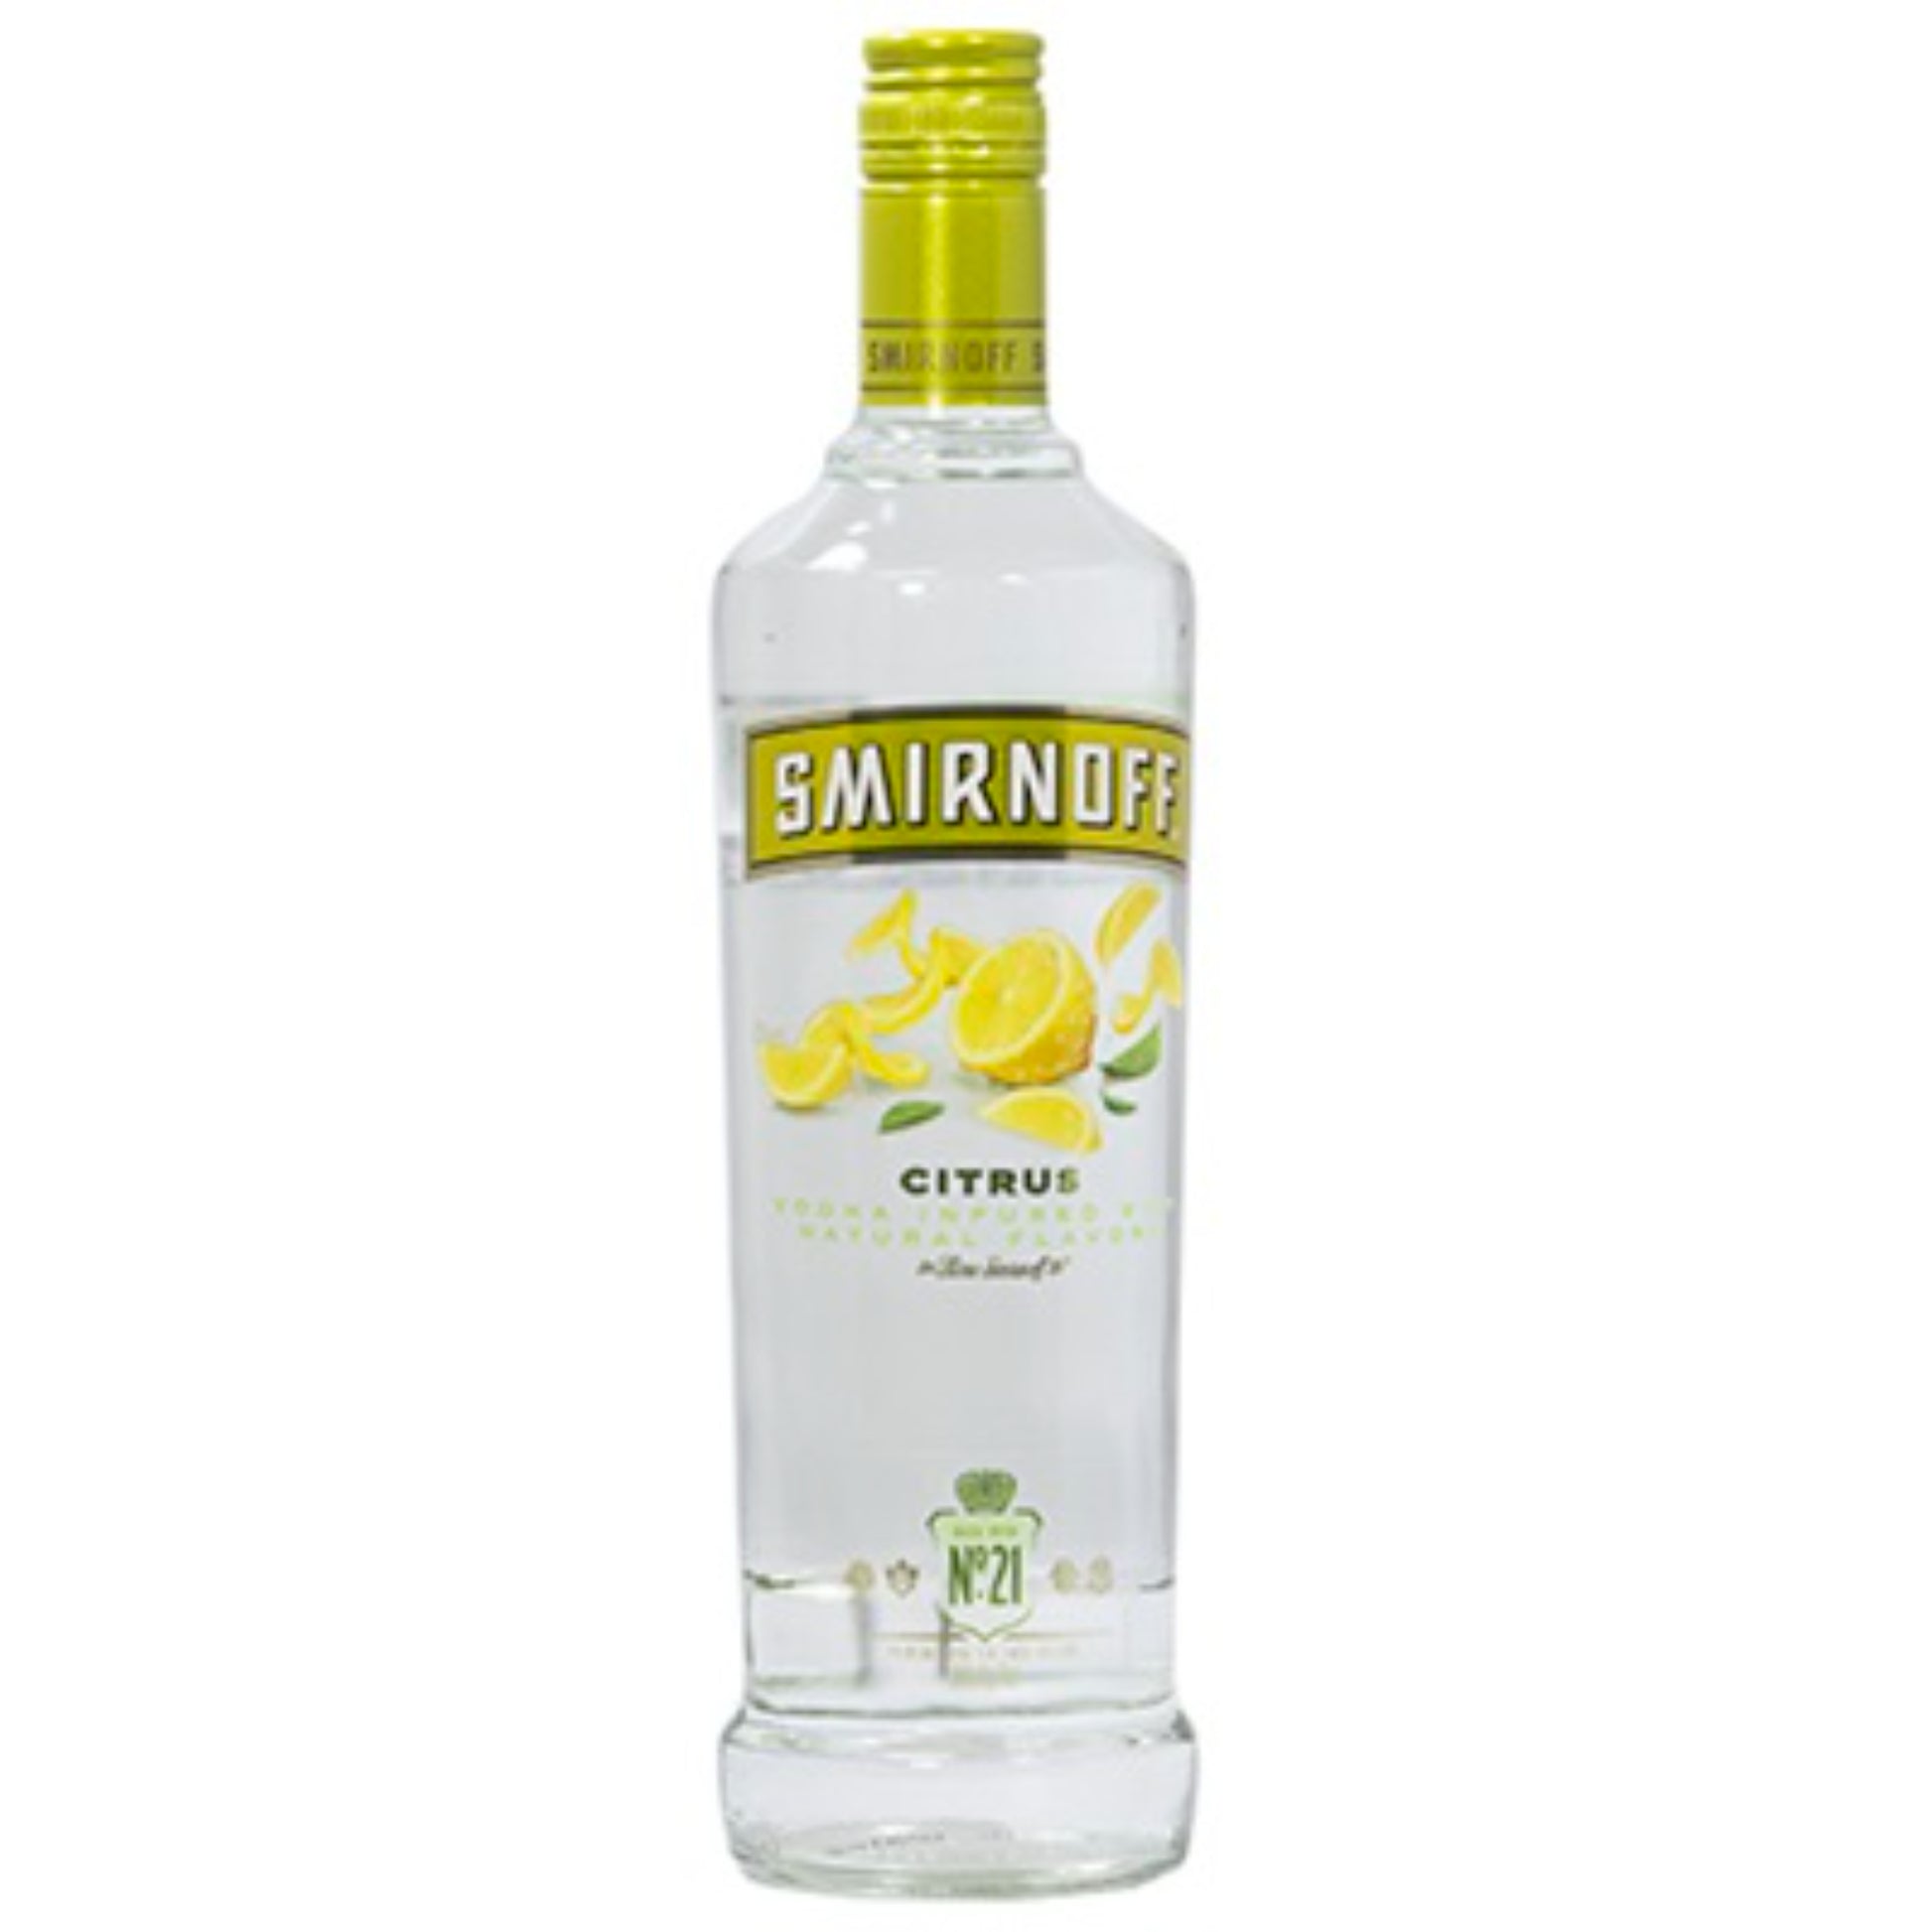 Smirnoff Citrus Vodka - Liquor Geeks